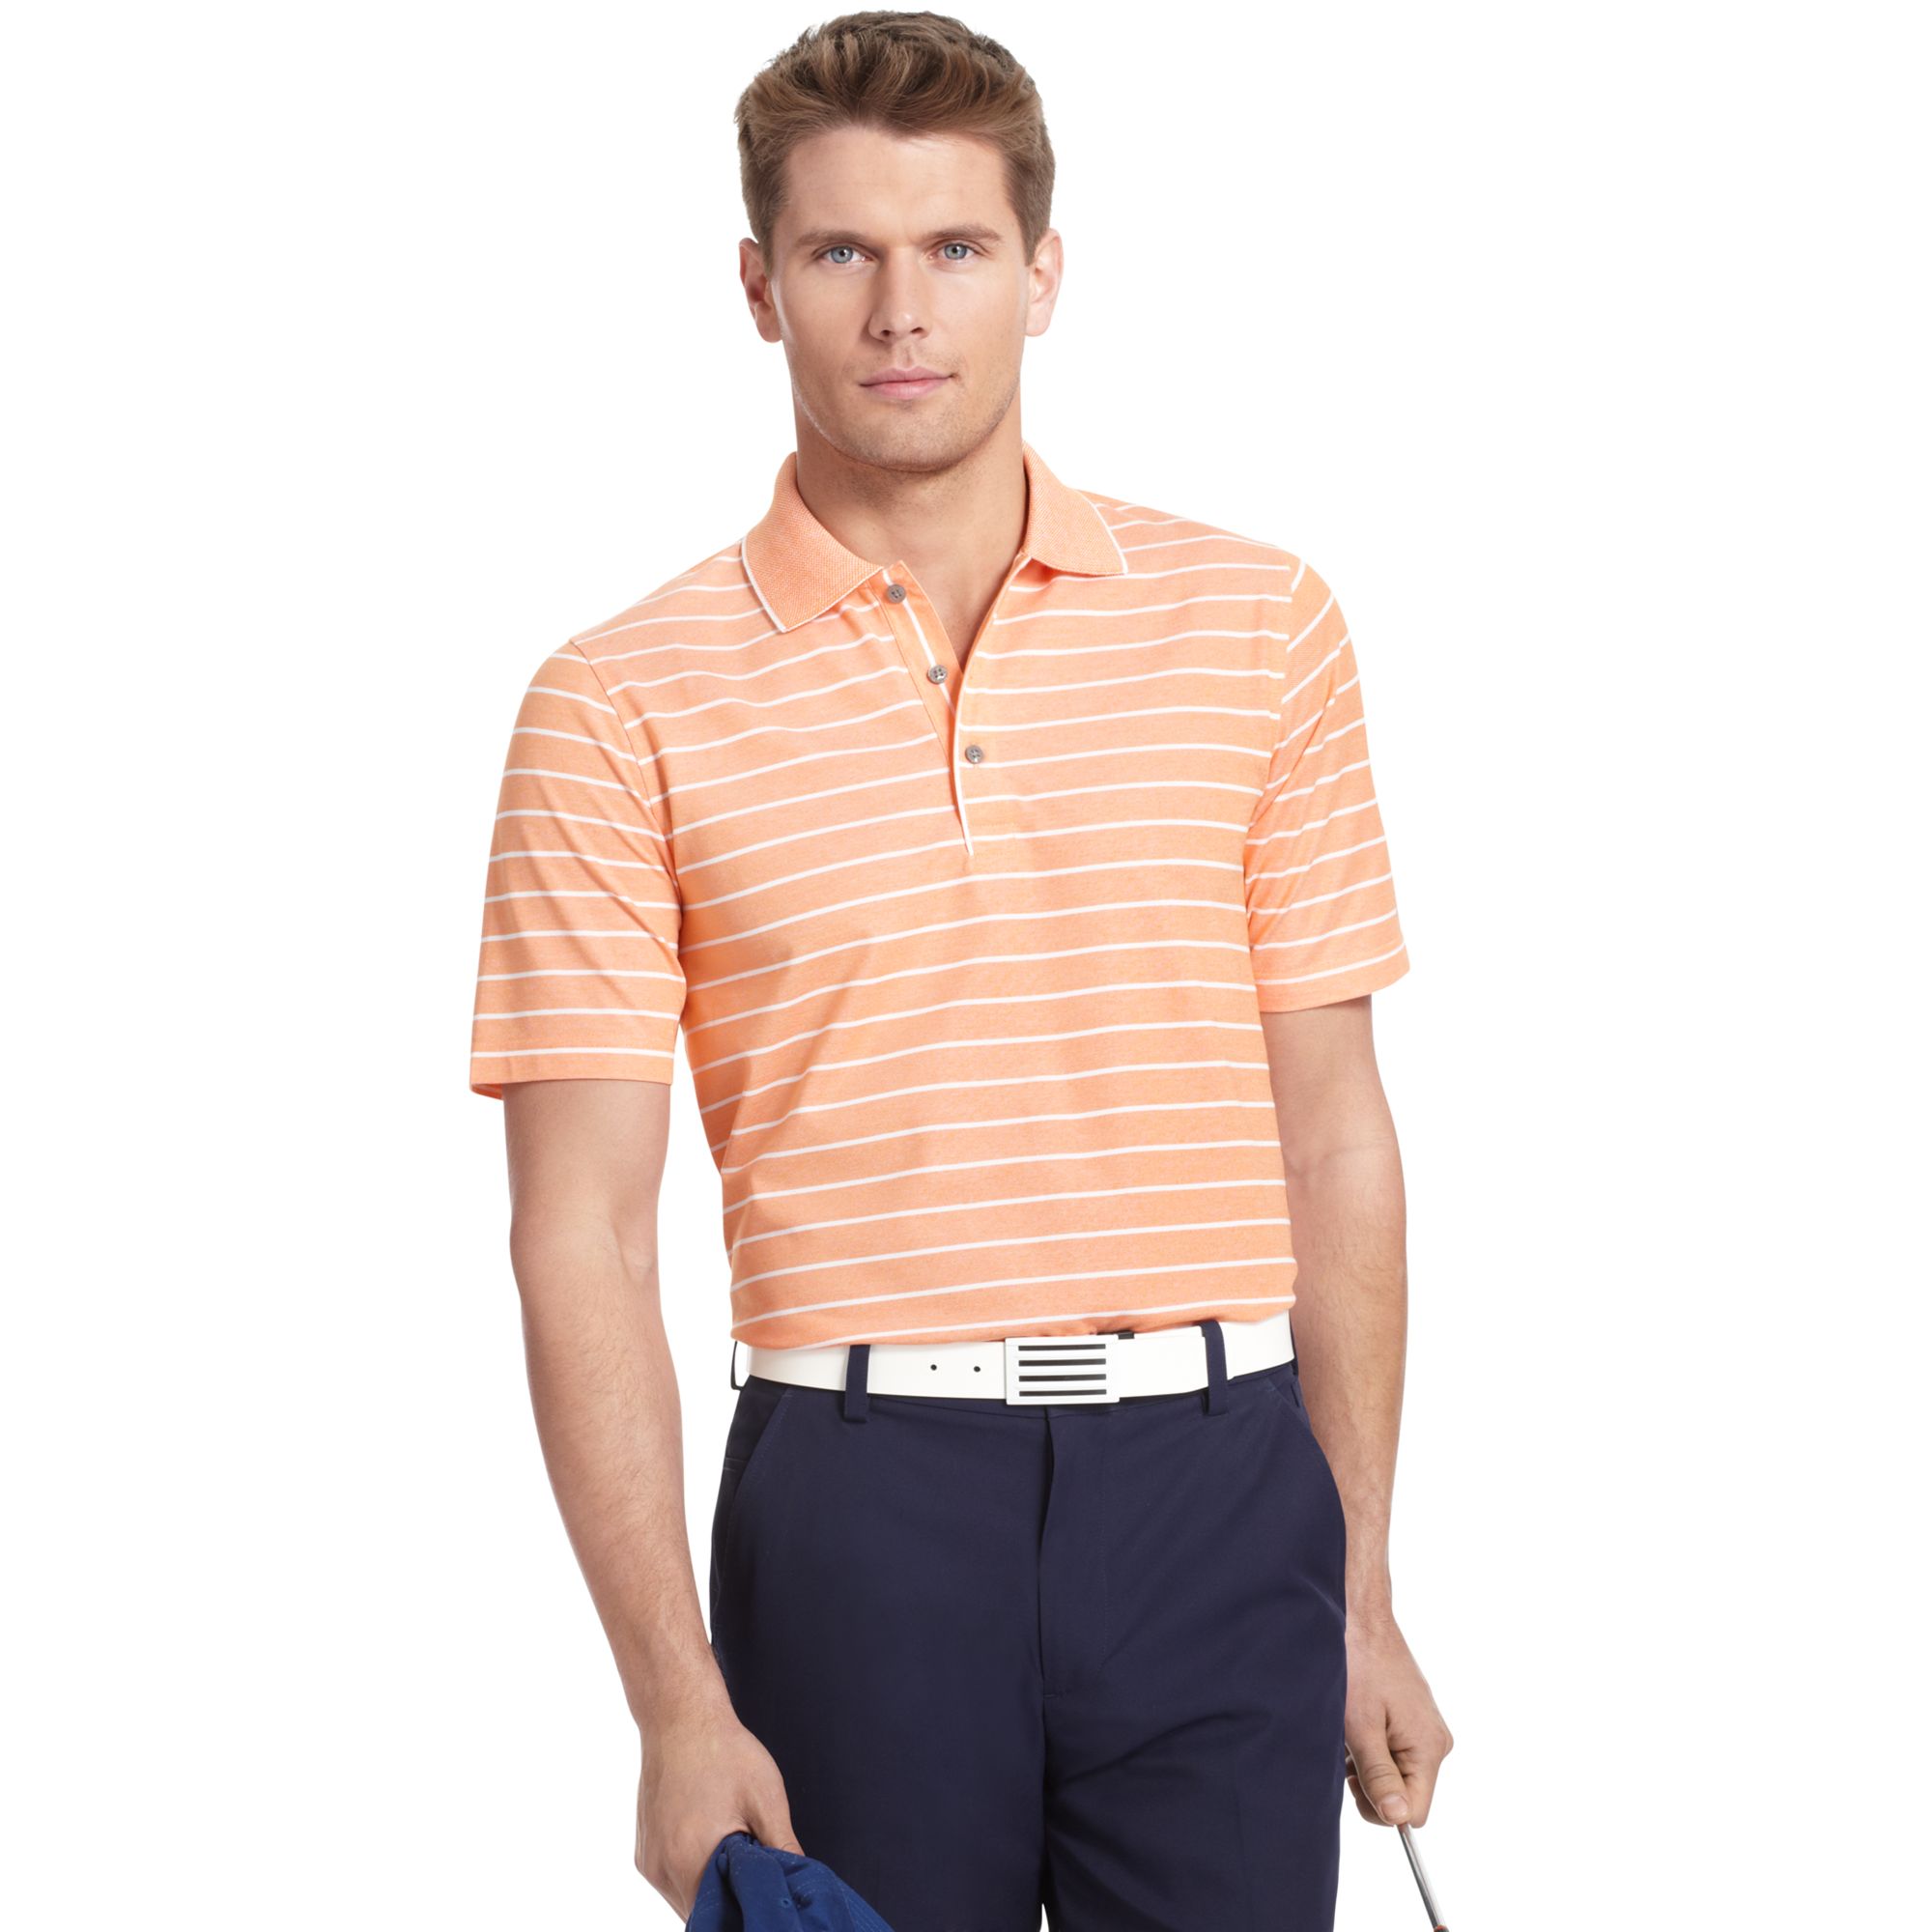 Lyst - Izod Oxford Stripe Polo Golf Performance Shirt in Orange for Men